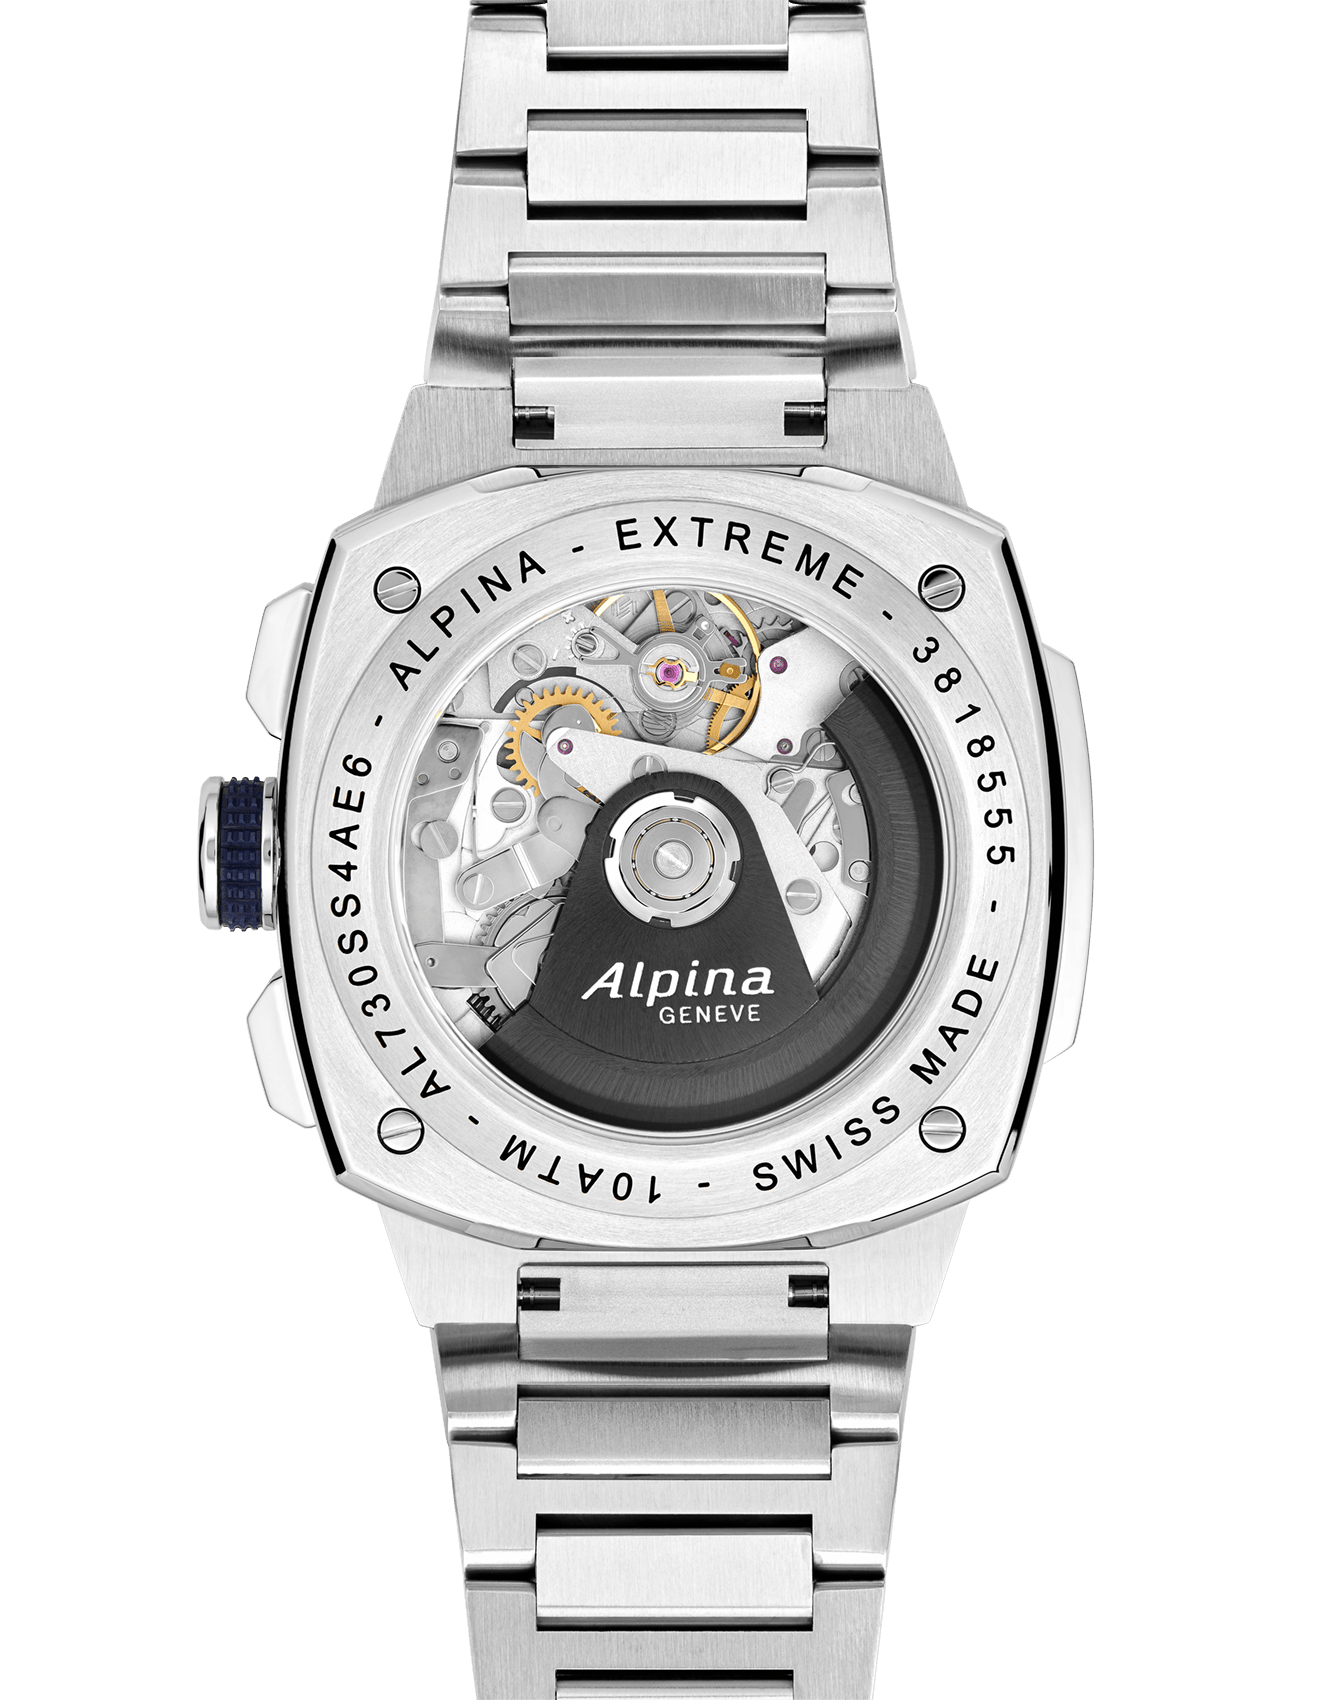 Alpiner Extreme Chronograph Automatic - Alpina Watches